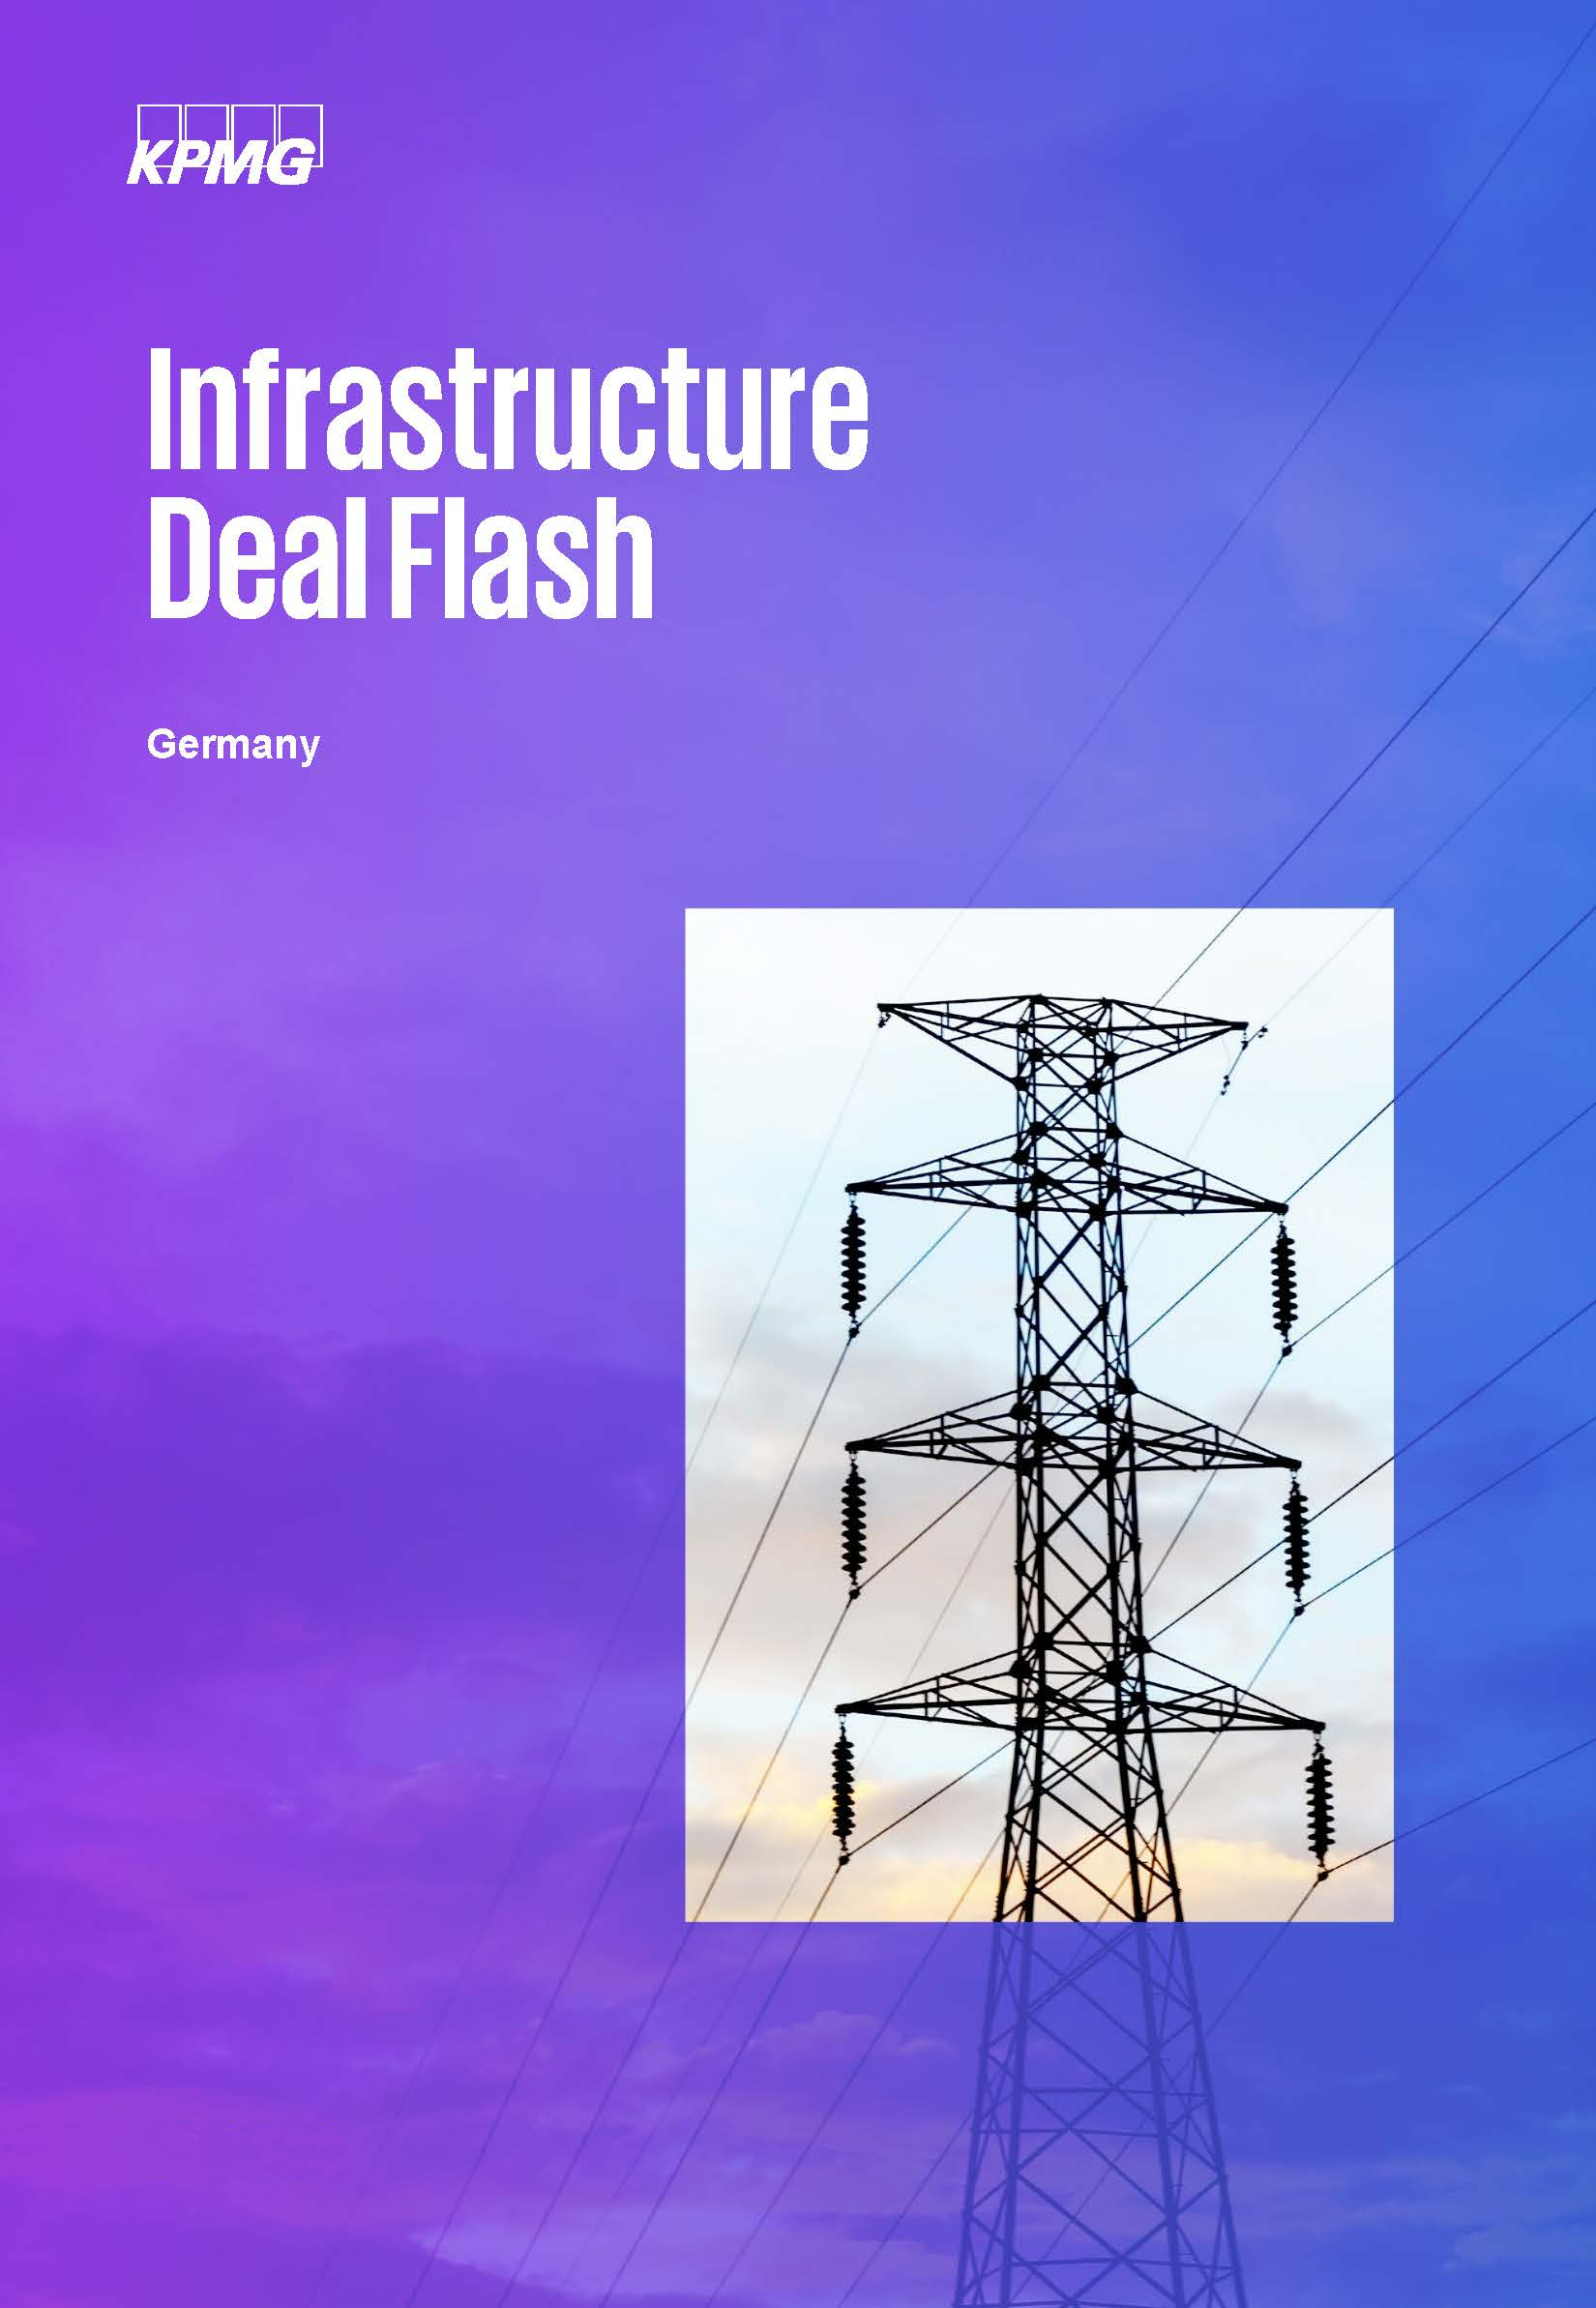 KPMG infrastructure deal flash - Q2 2022